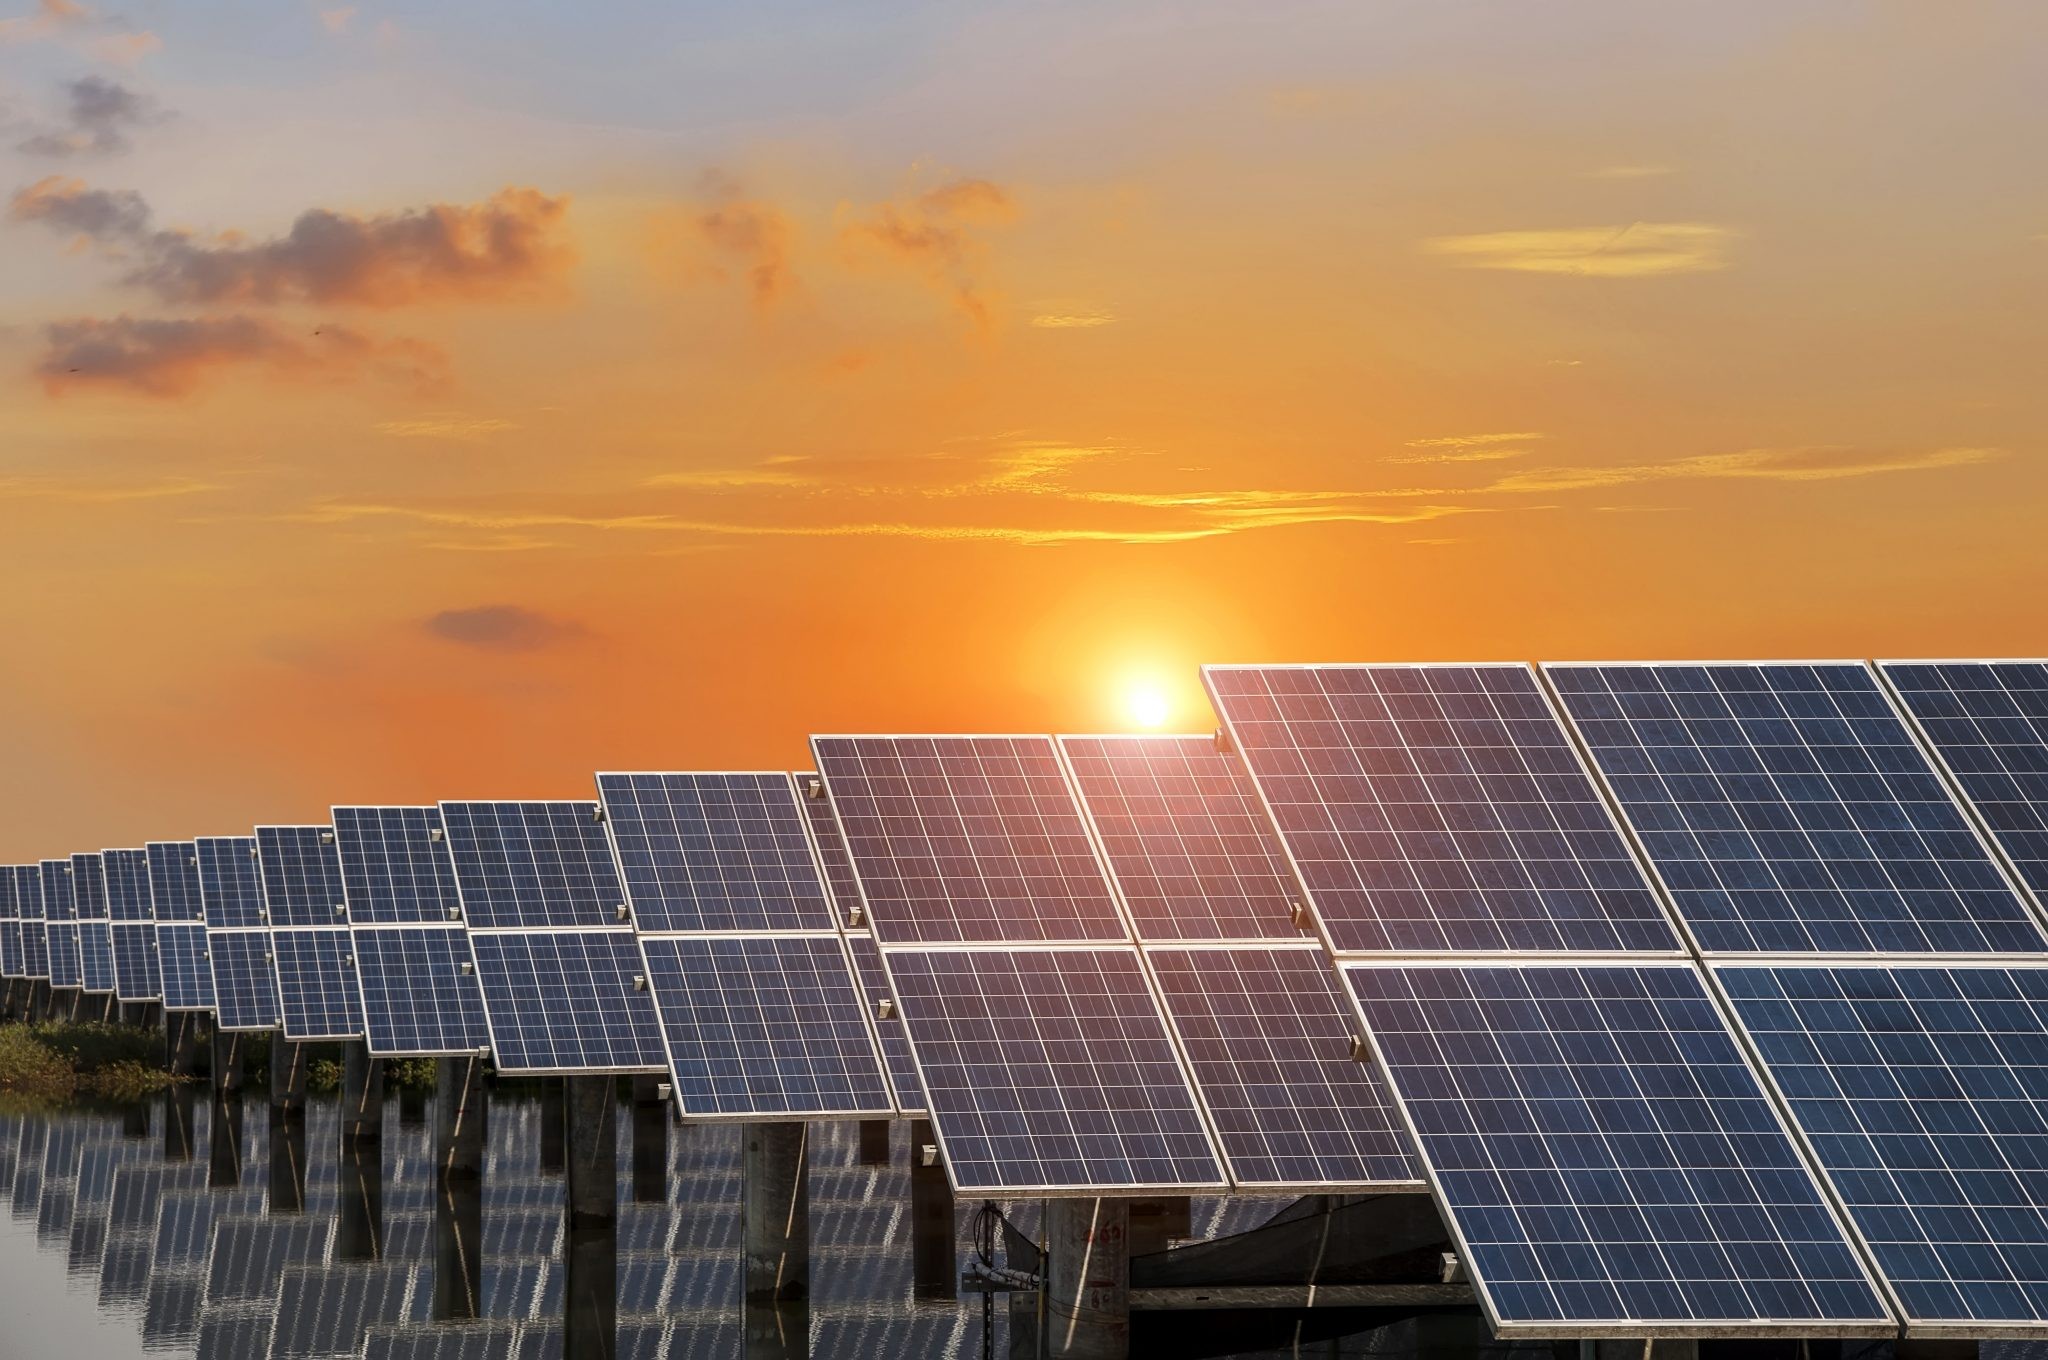 Nuevo León’s energy sector will bet on solar energy in 2021